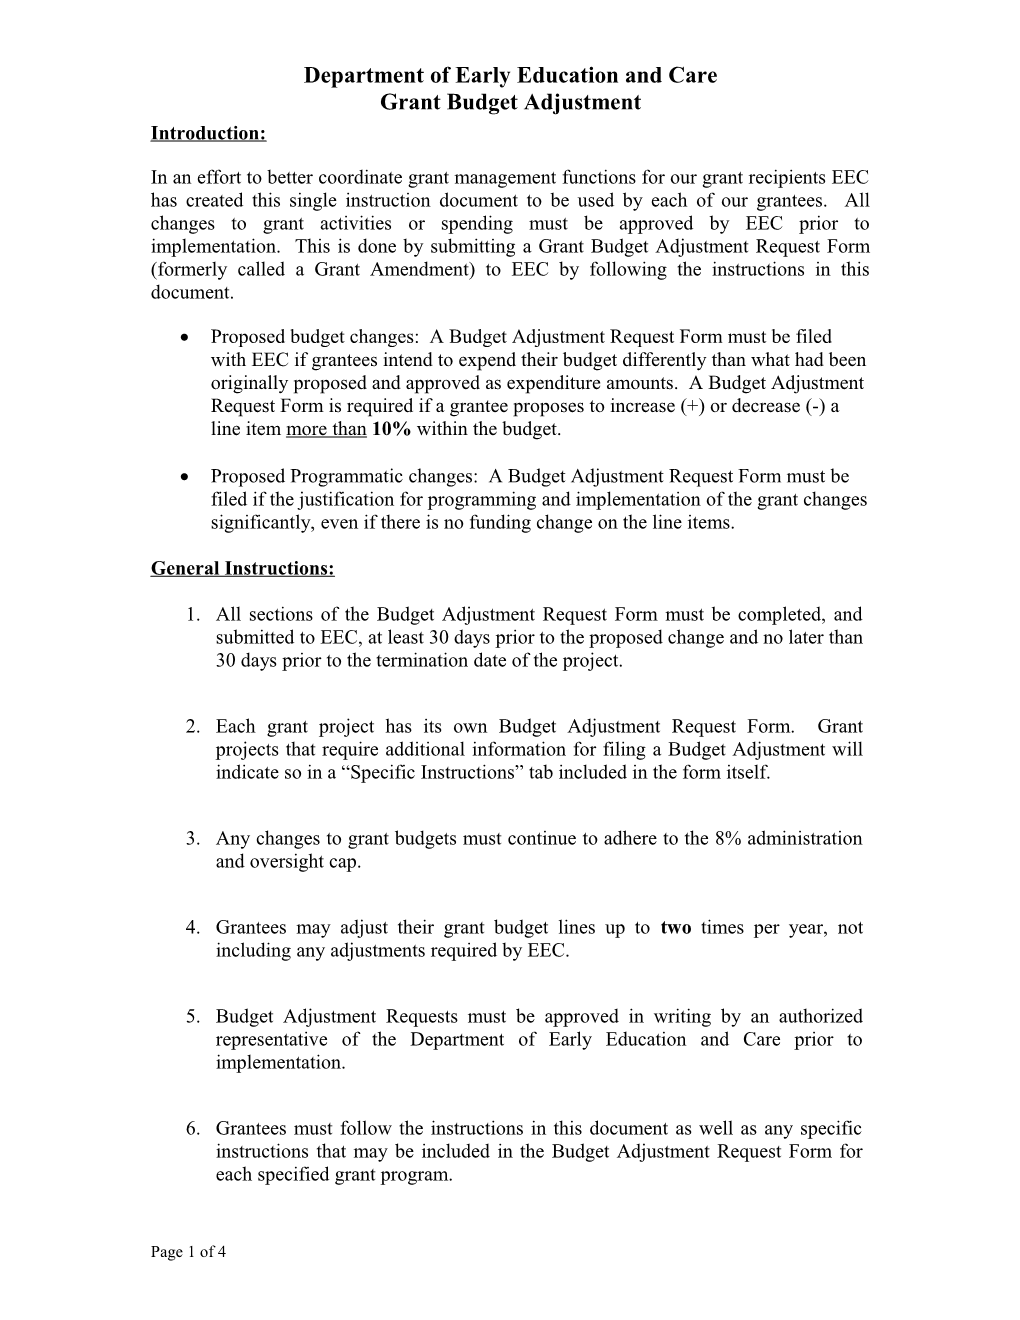 FY 2007 CPC Revised Budget Amendment Instructions